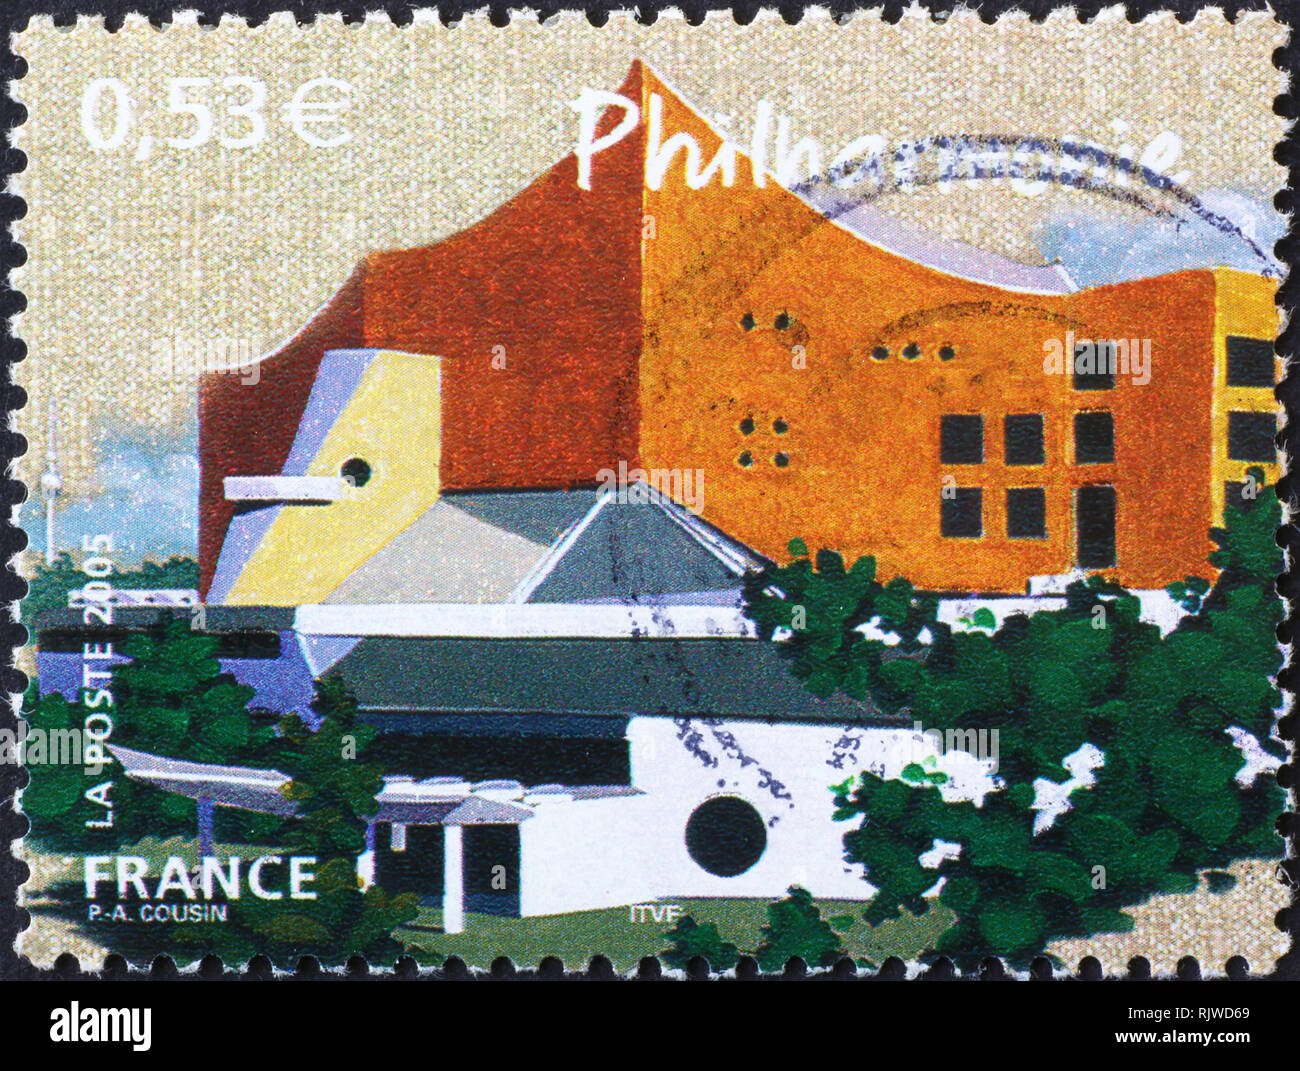 Berliner Philharmonie Concert Hall on postage stamp Stock Photo